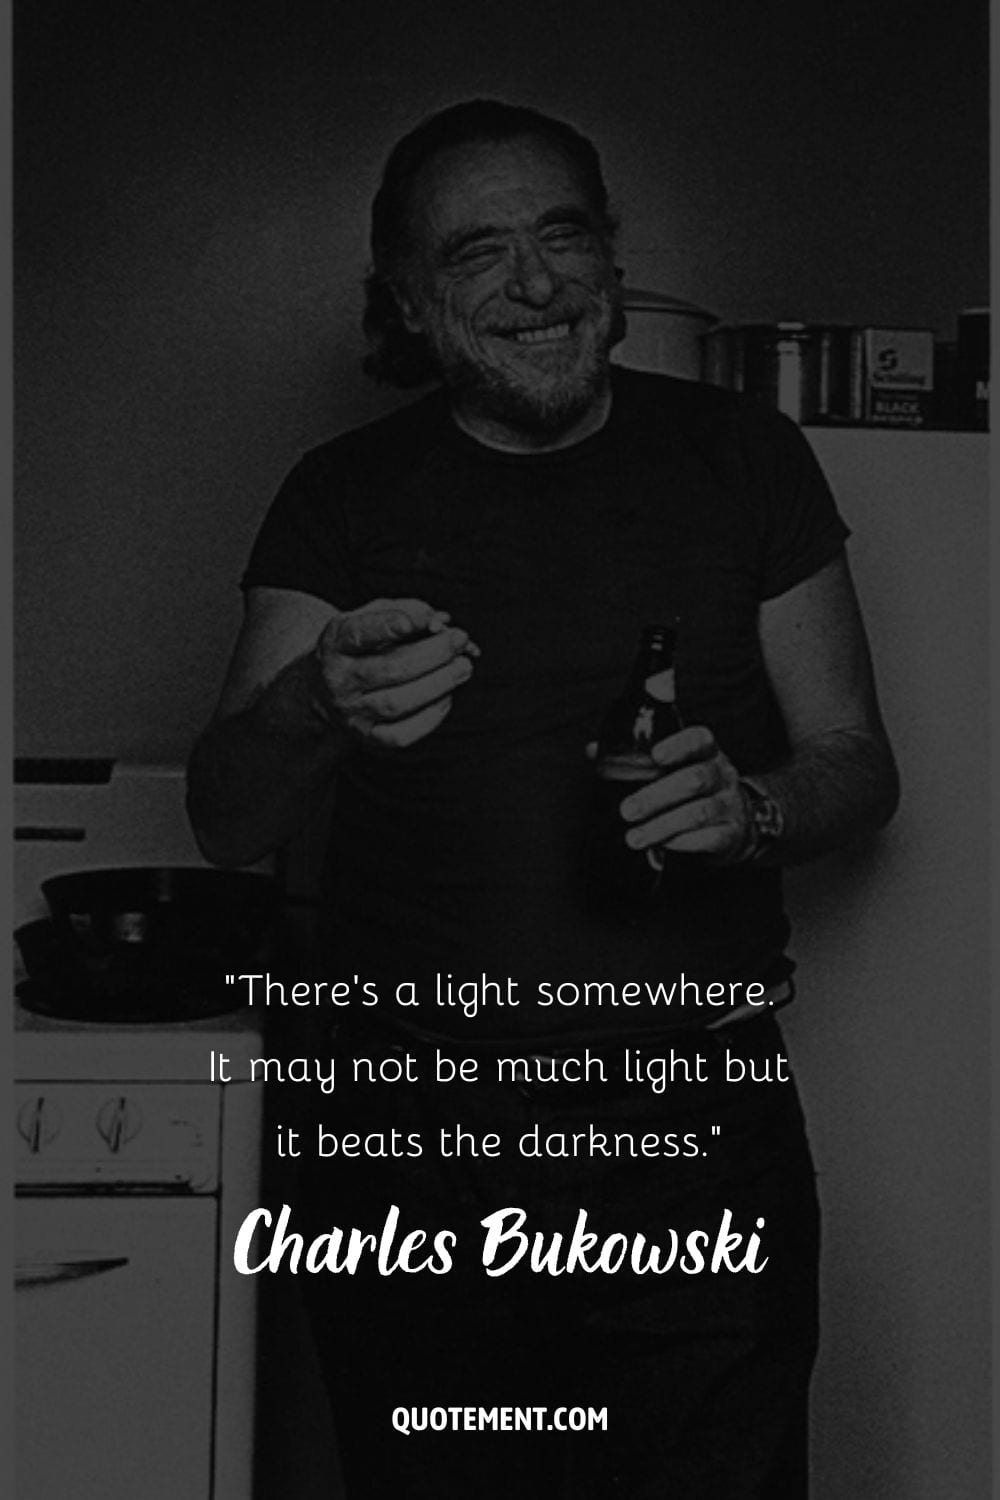 Bukowski enjoying a smoke and beer in the kitchen